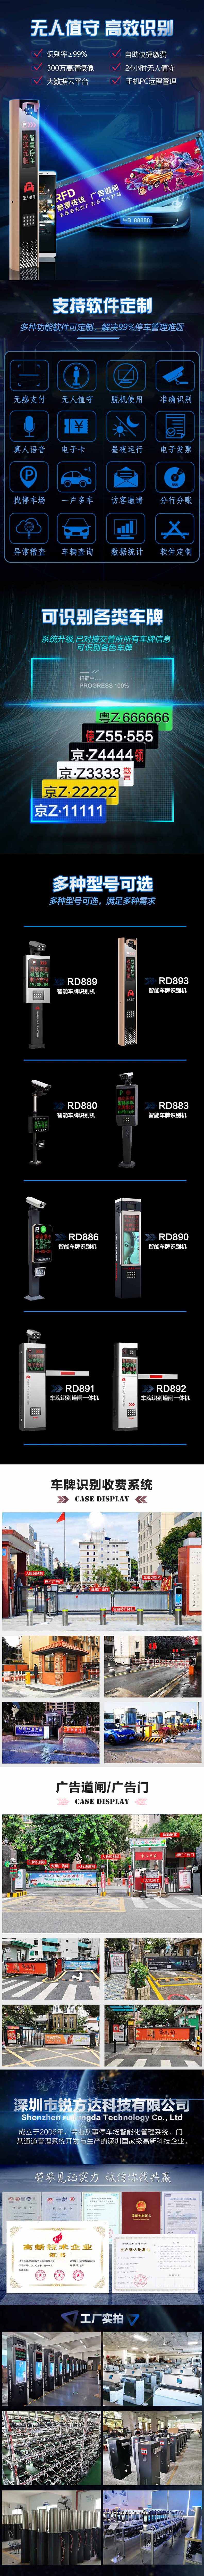 RD890車牌識別系統一體機